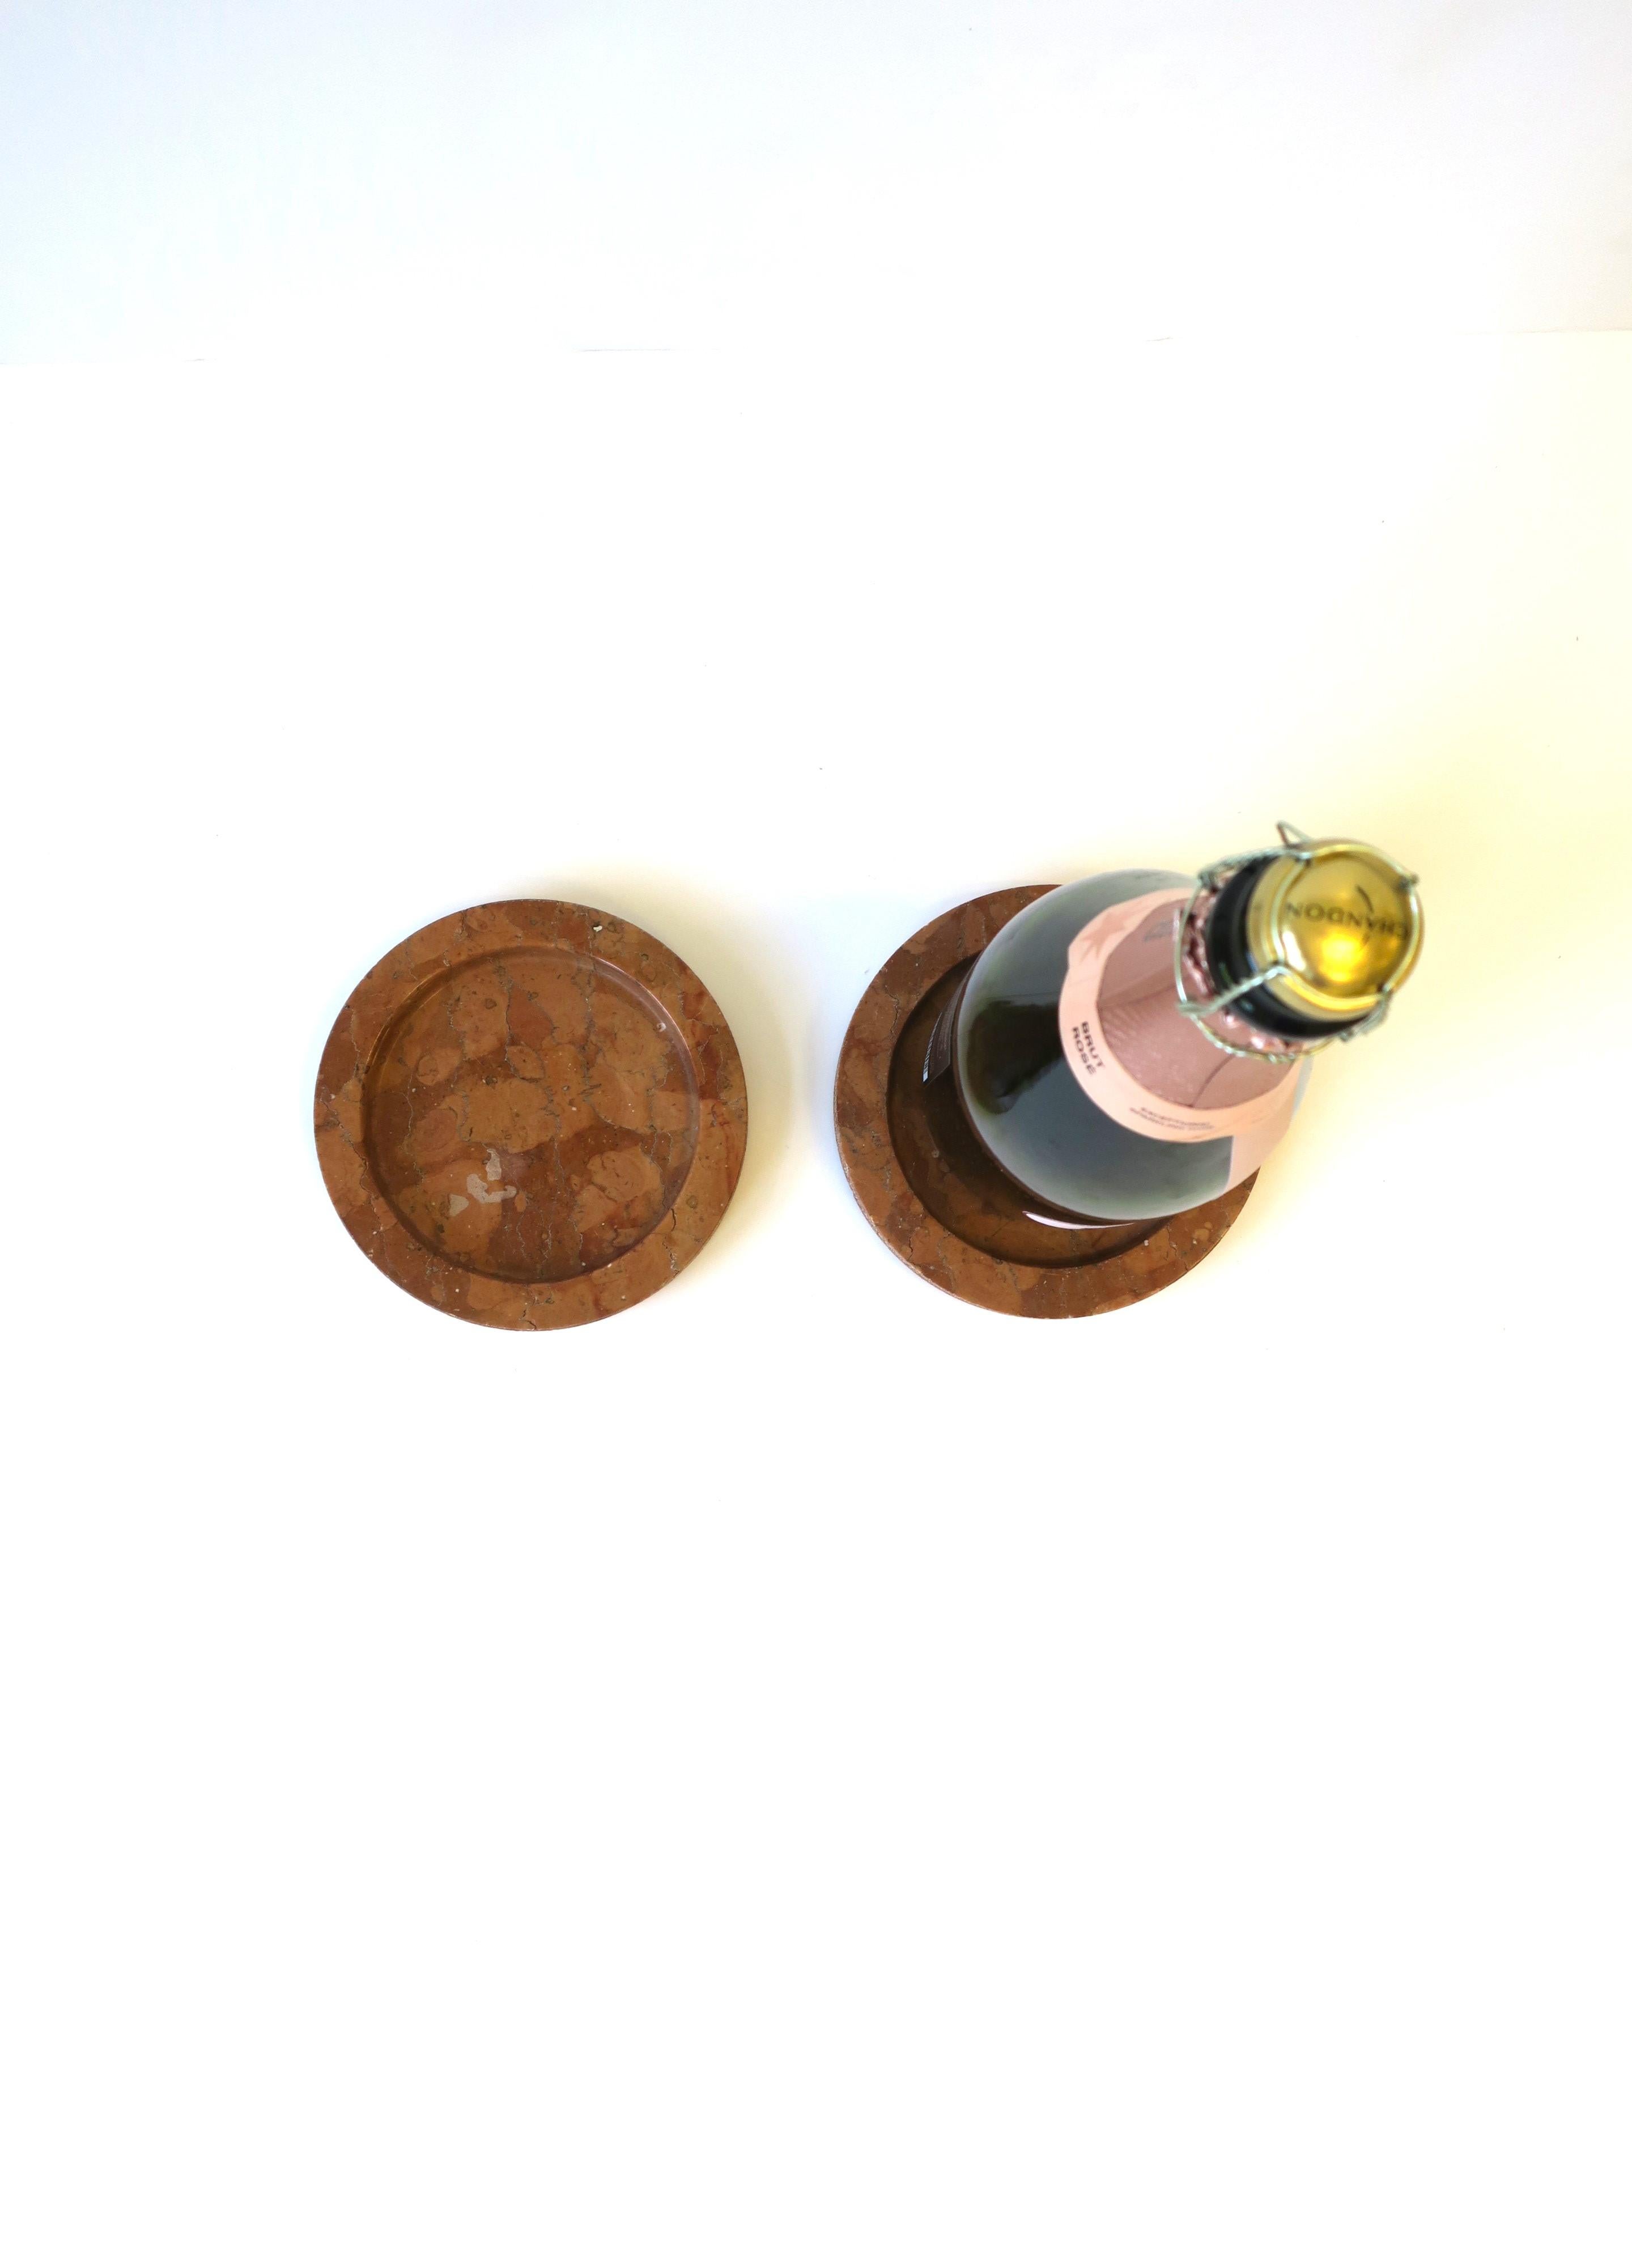 Italian Postmodern Marble Terracotta Wine Bottle Coaster or Catchall, Set of 2 For Sale 3